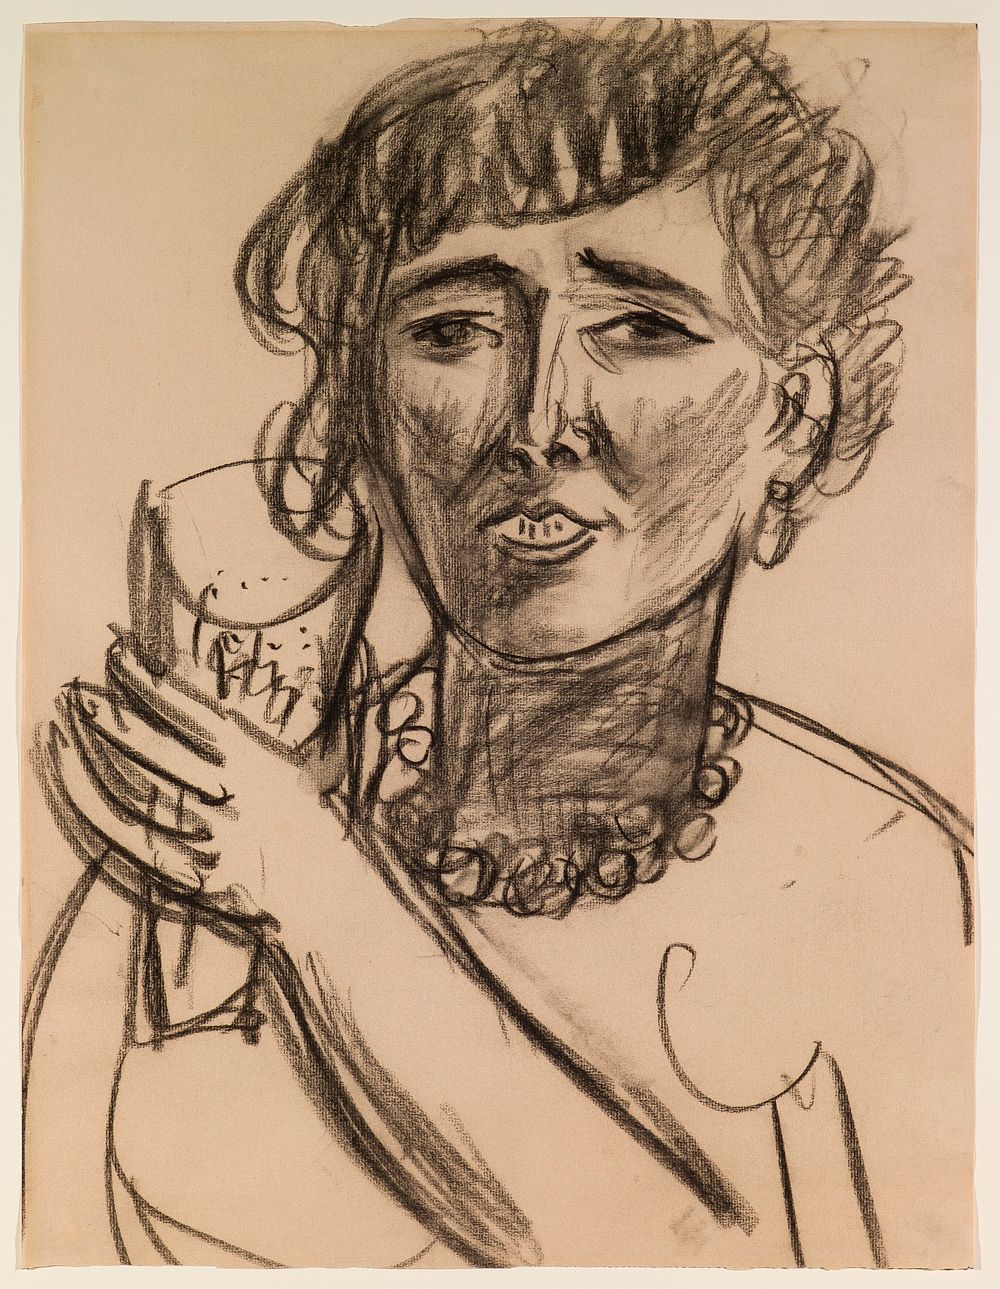 Portrait of Frances Swing van Veen by Max Beckmann